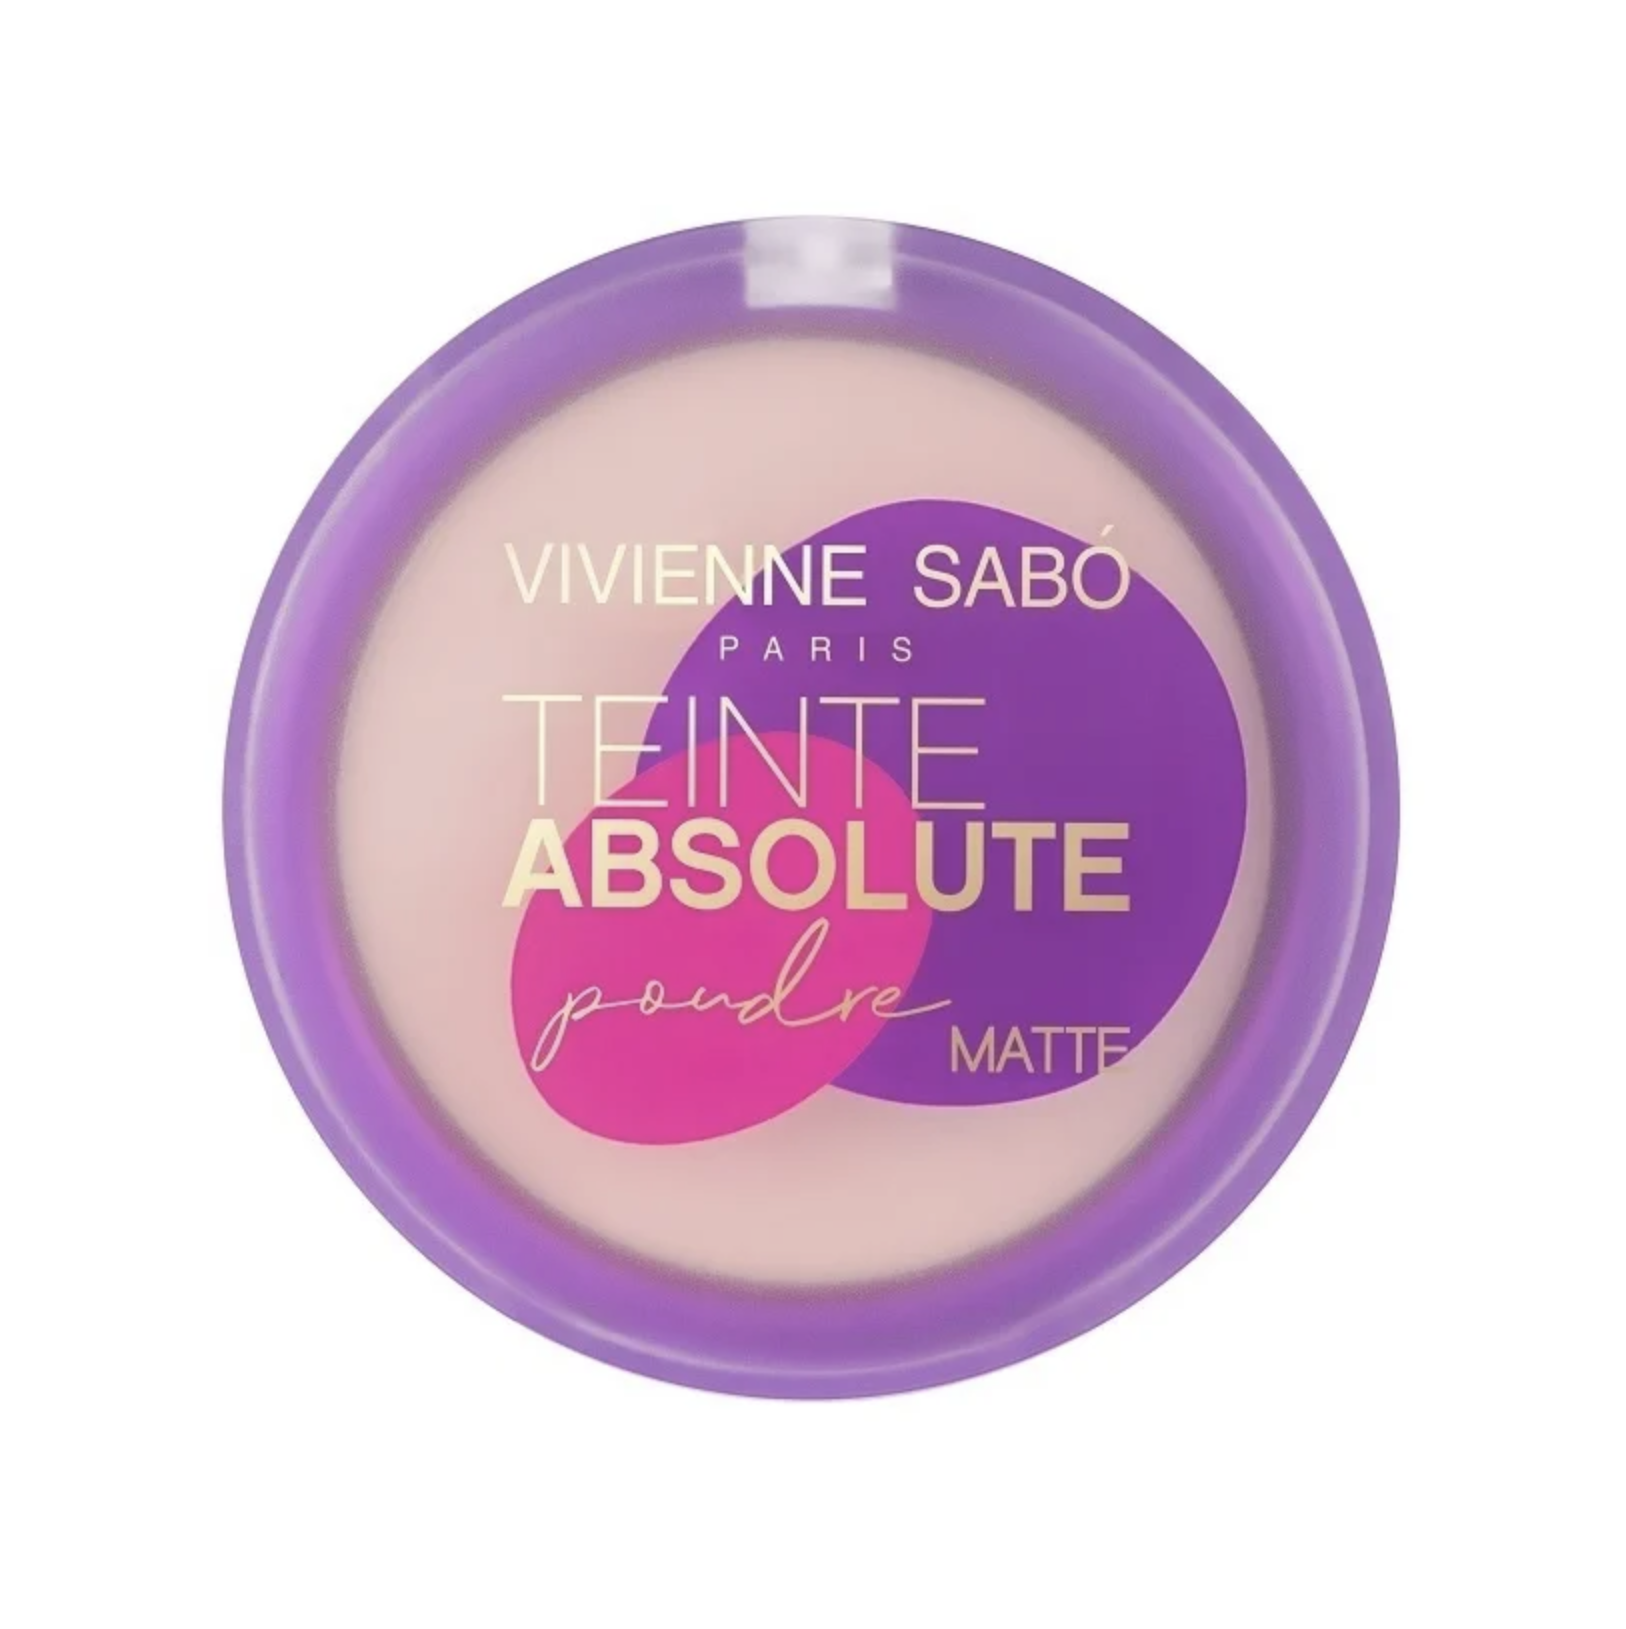    / Vivienne Sabo -     Teinte Absolute Poudre Matte  02, 6 